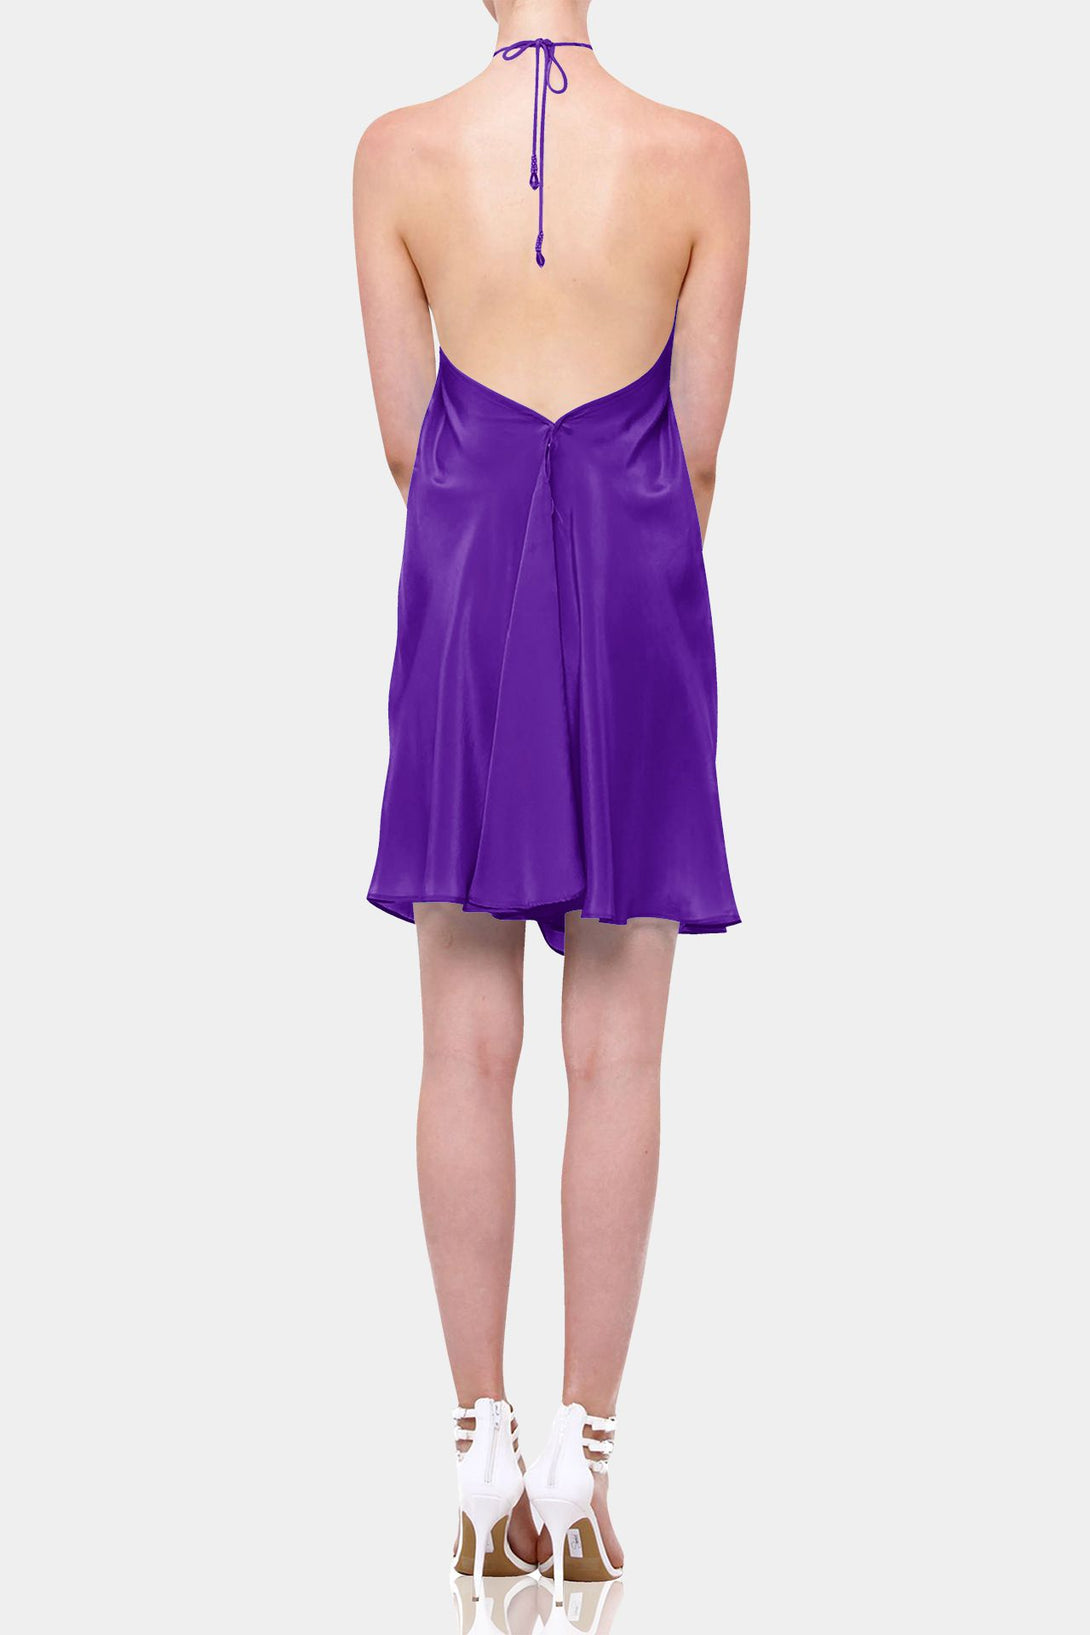  purple dress mini, designer mini dress, Shahida Parides, classy mini dress,